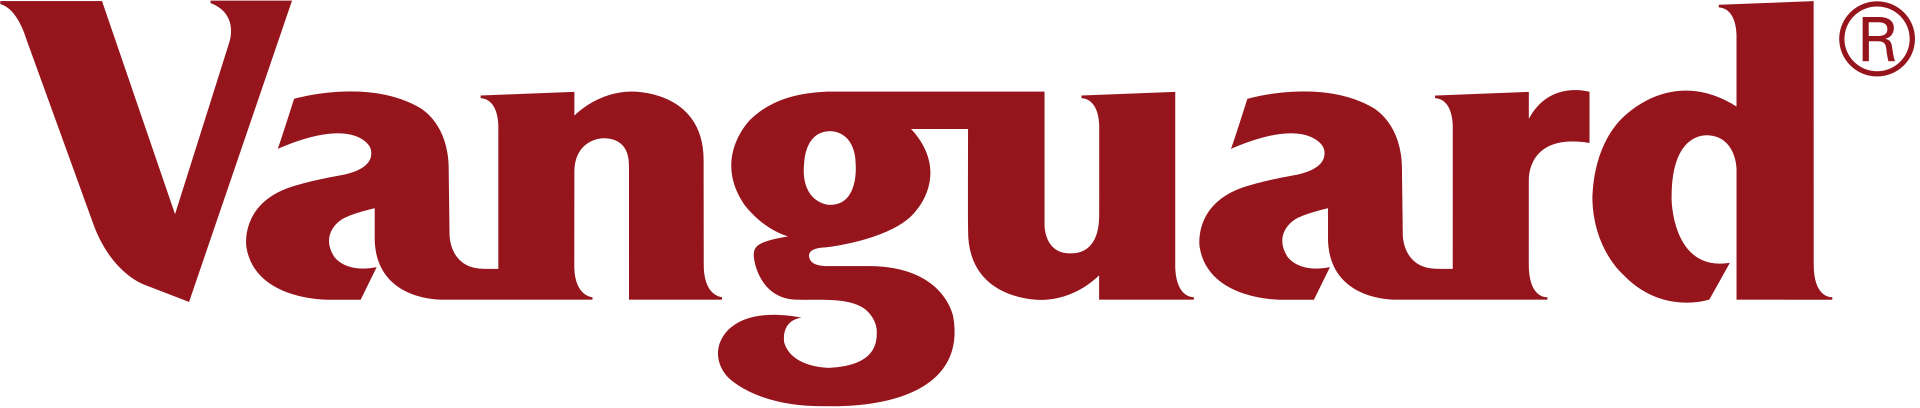 Vanguard Group